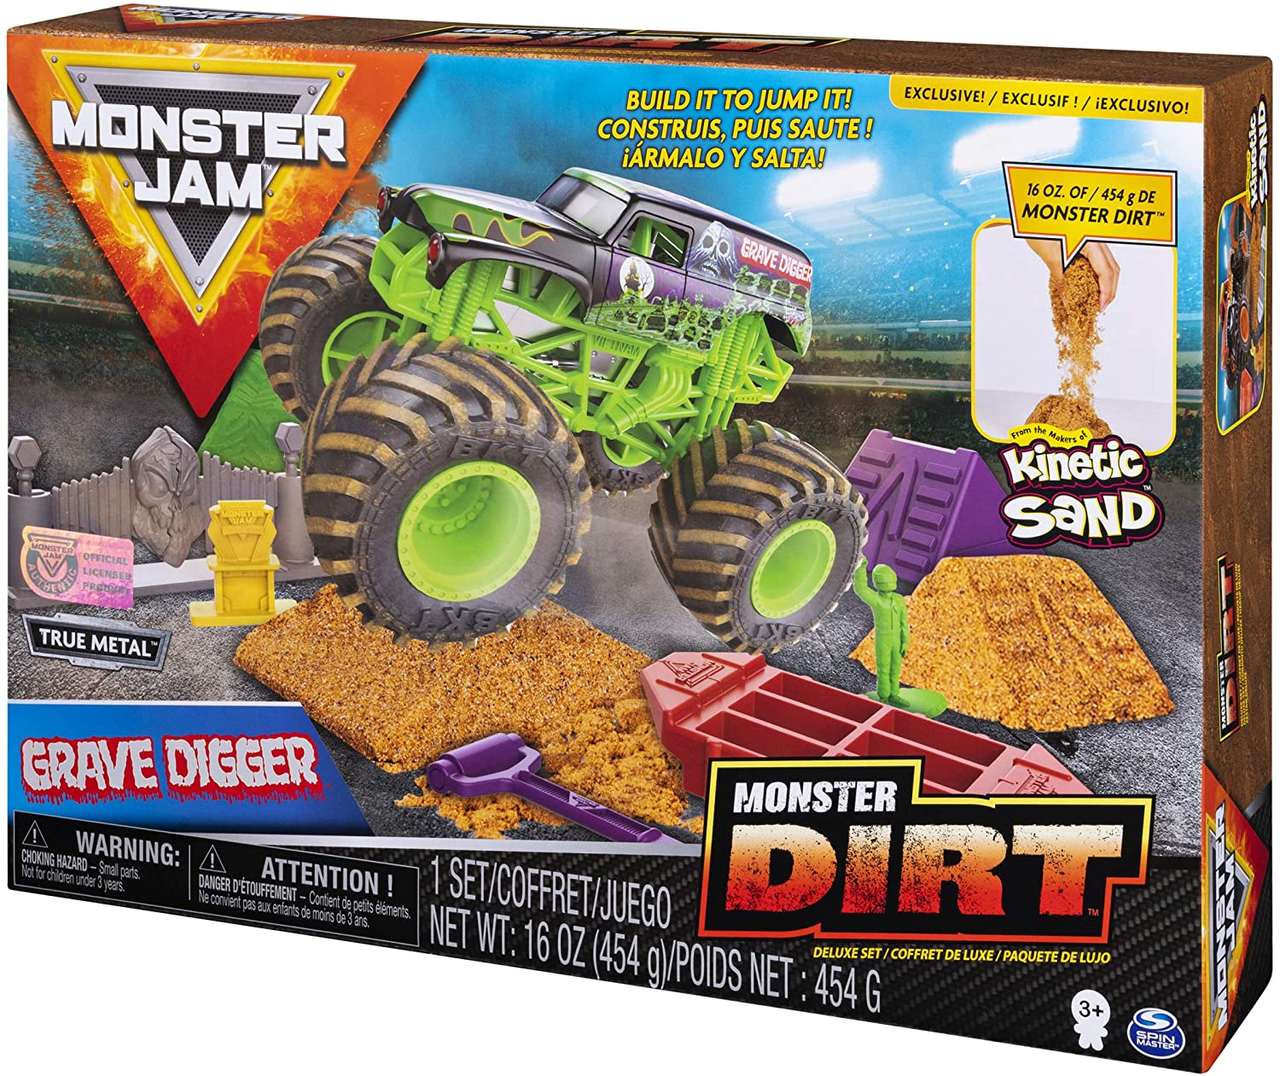 Pista Monster Jam - Playset Deluxe c/ 453 g de Areia Mágica2 - JP Toys -  Brinquedos e Actions Figures para todas as idades